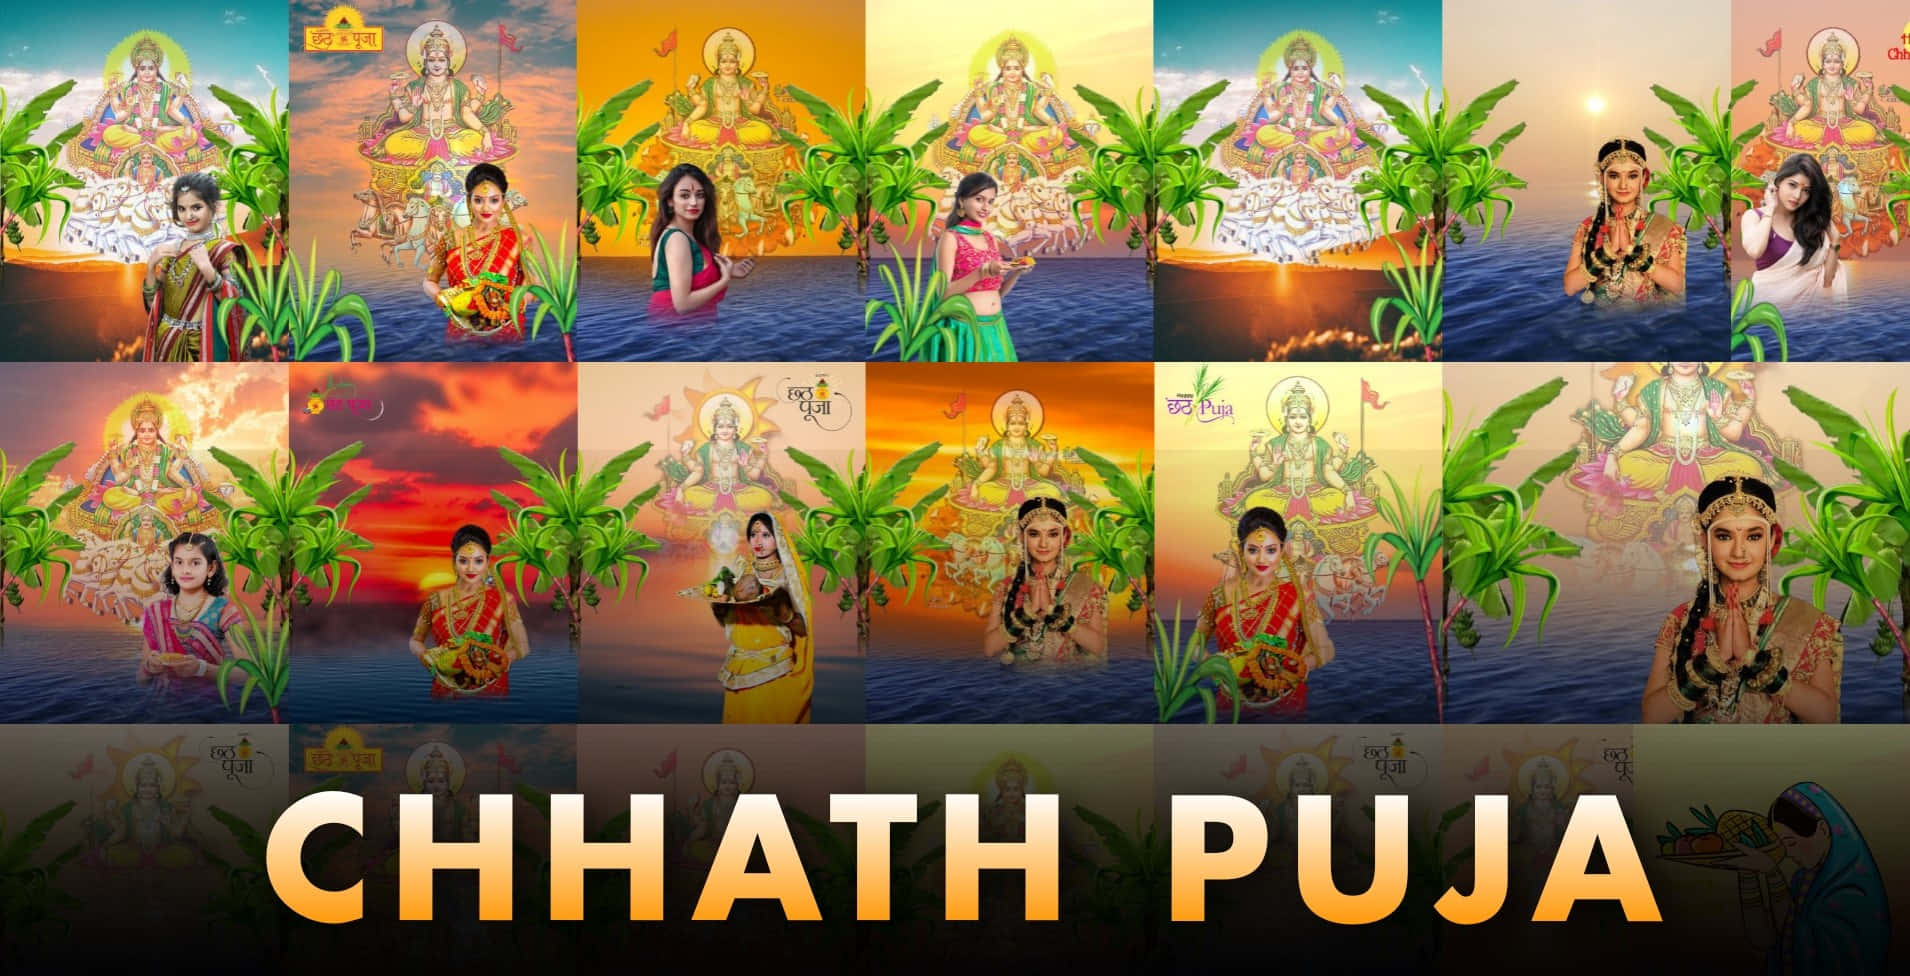 Celebrating Chhath Puja: Hindu festival honoring the Sun God